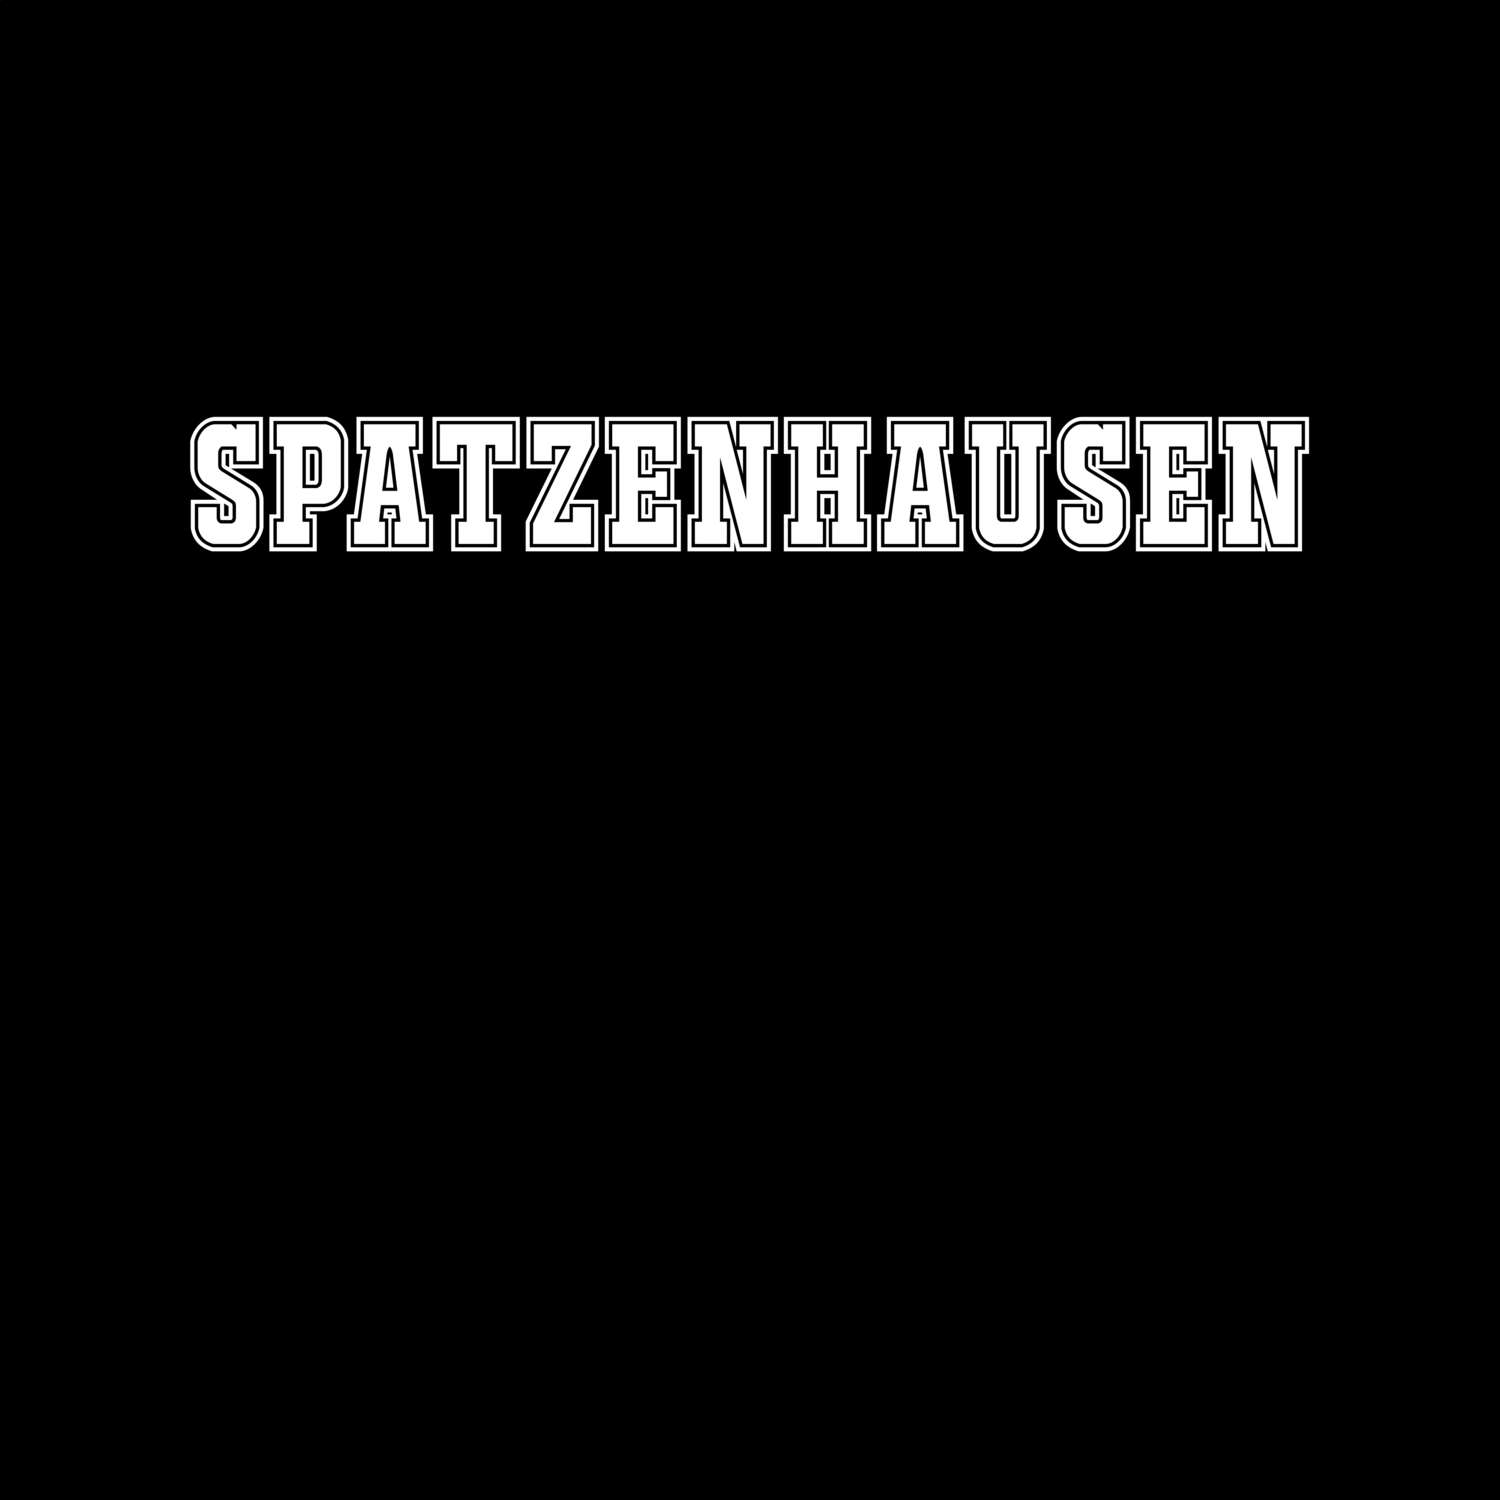 Spatzenhausen T-Shirt »Classic«